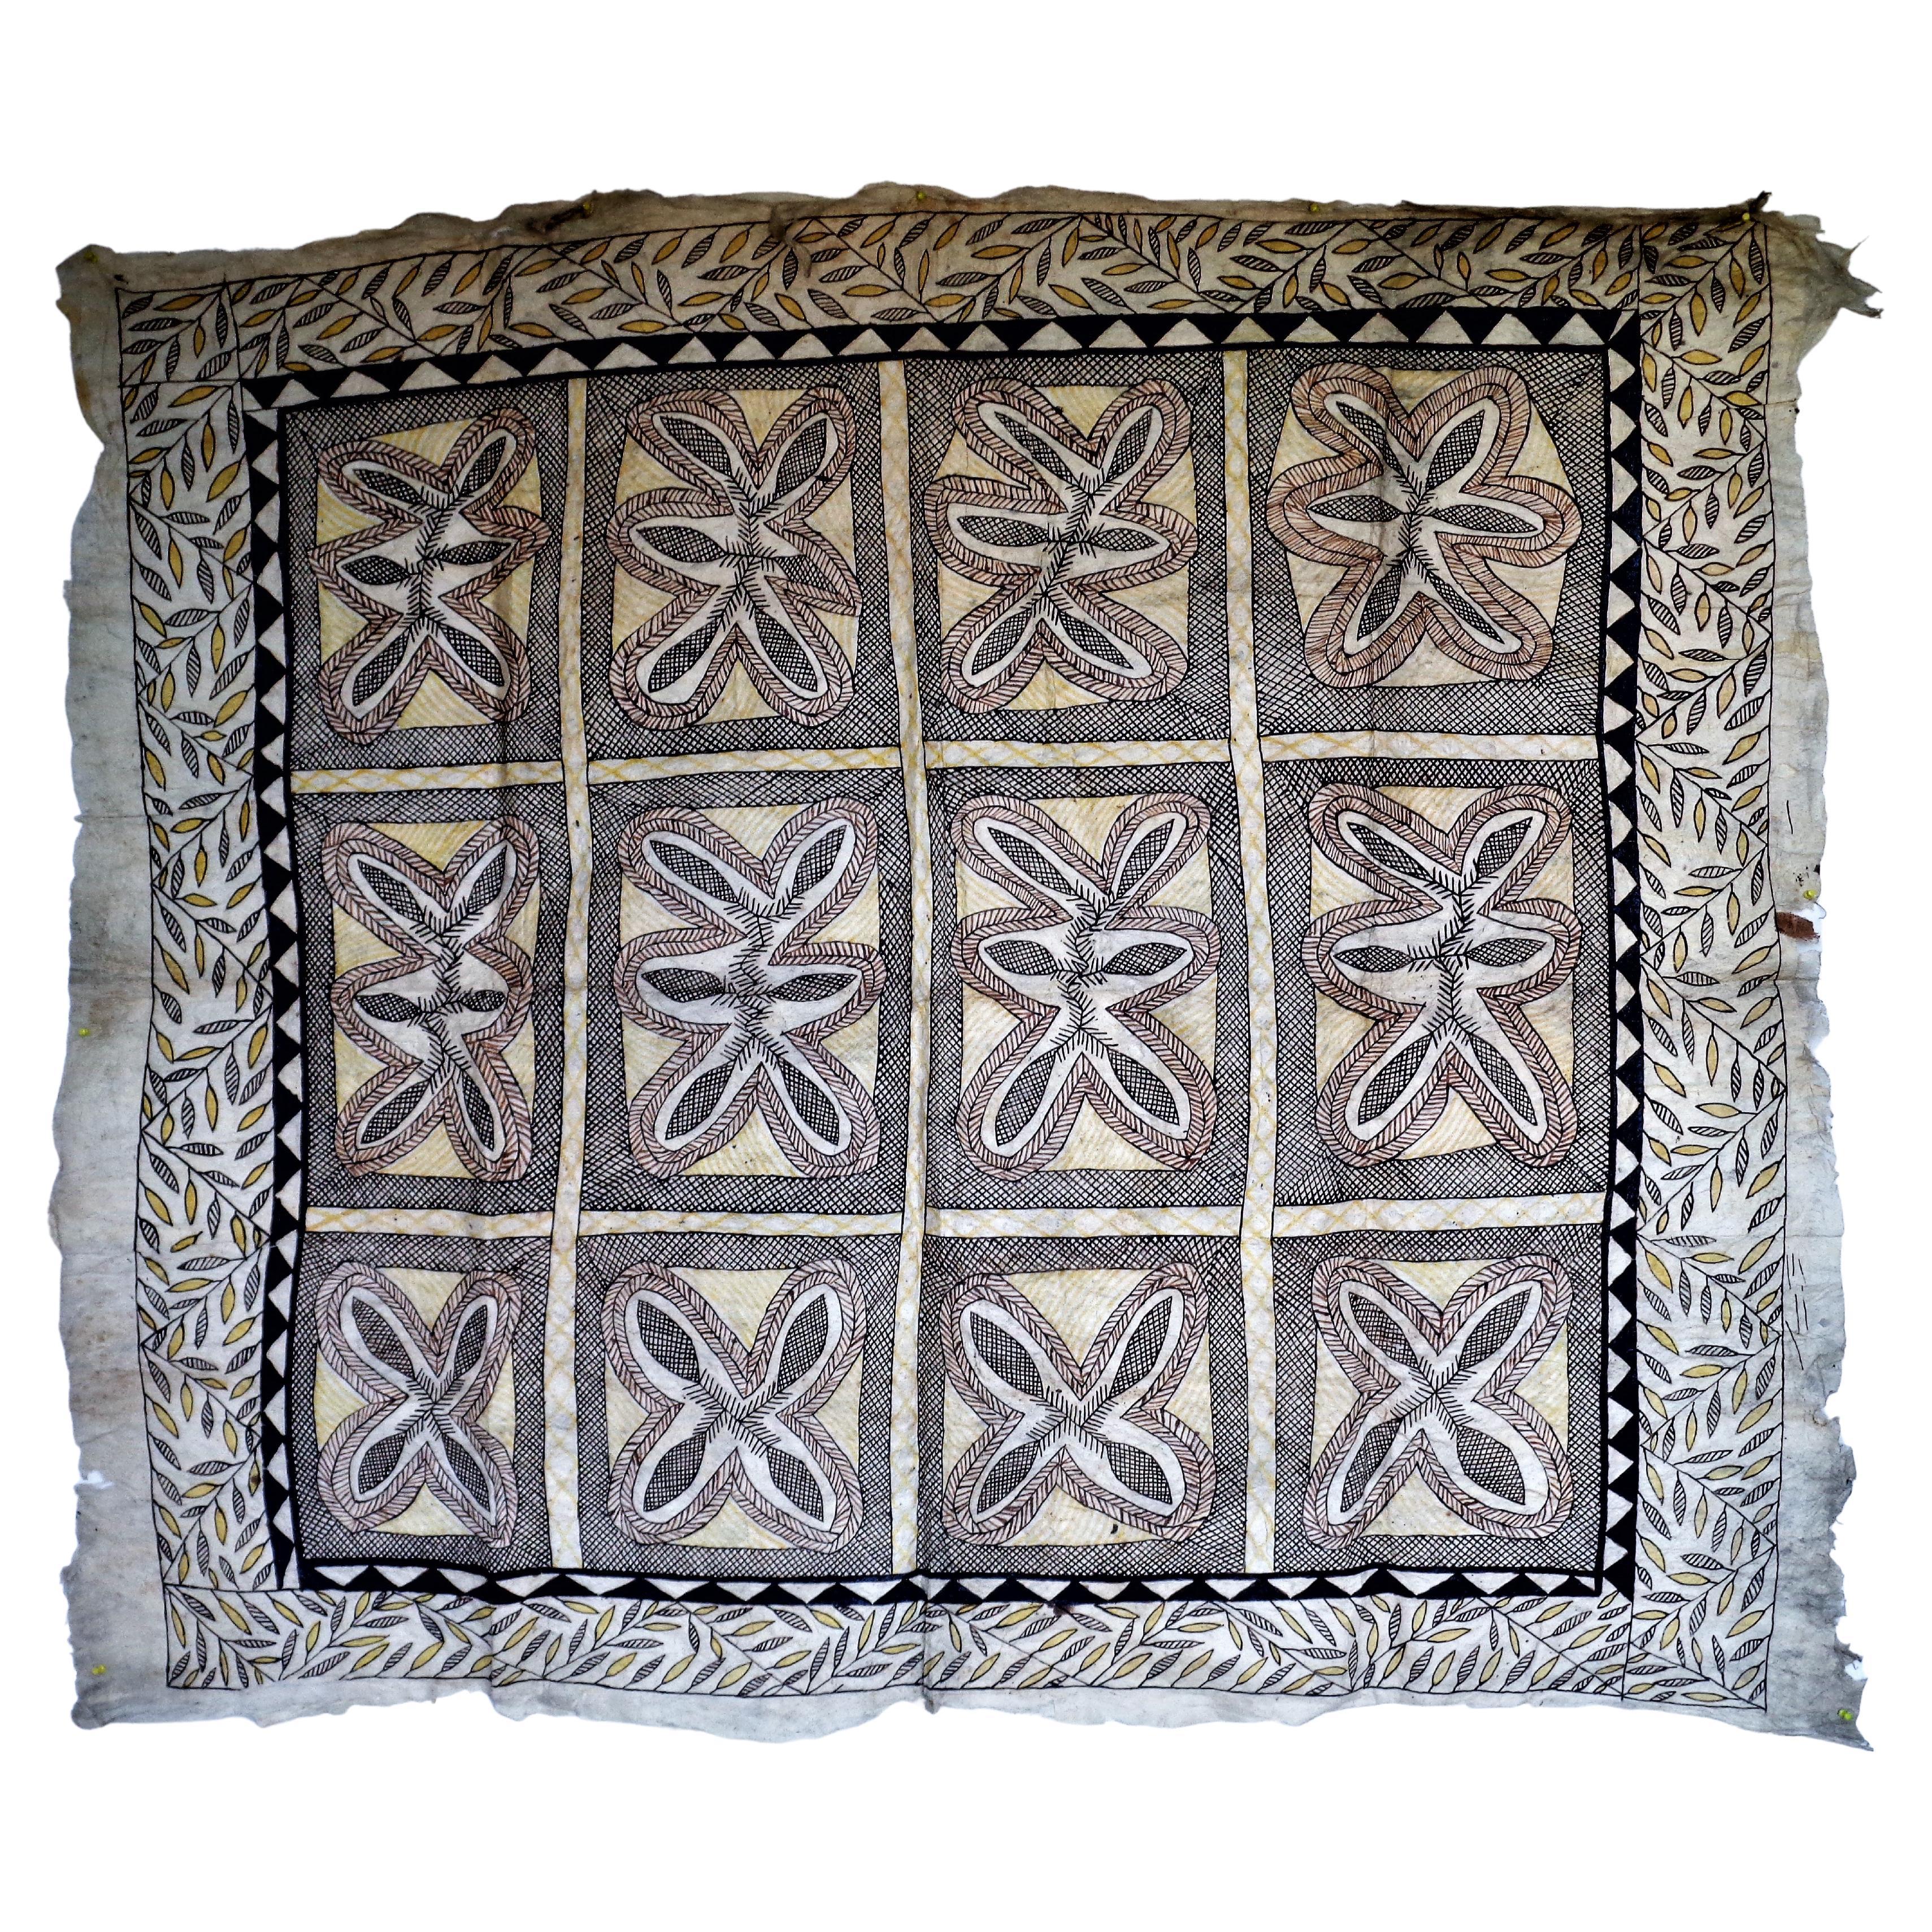 19th Century Samoan Tapa Cloth